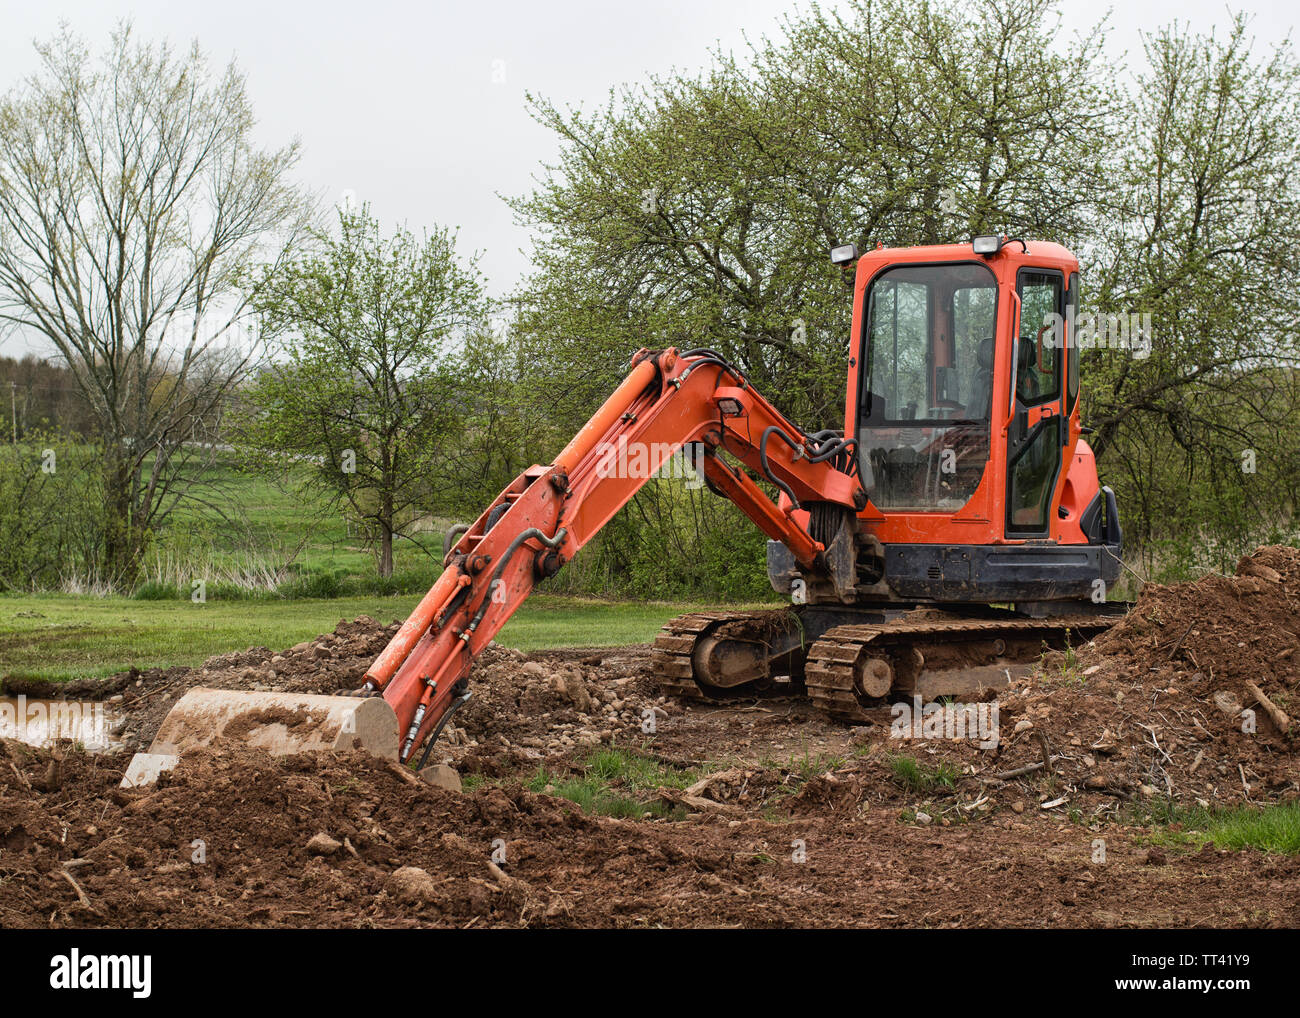 Orange excavator at rural work site. Stock Photo